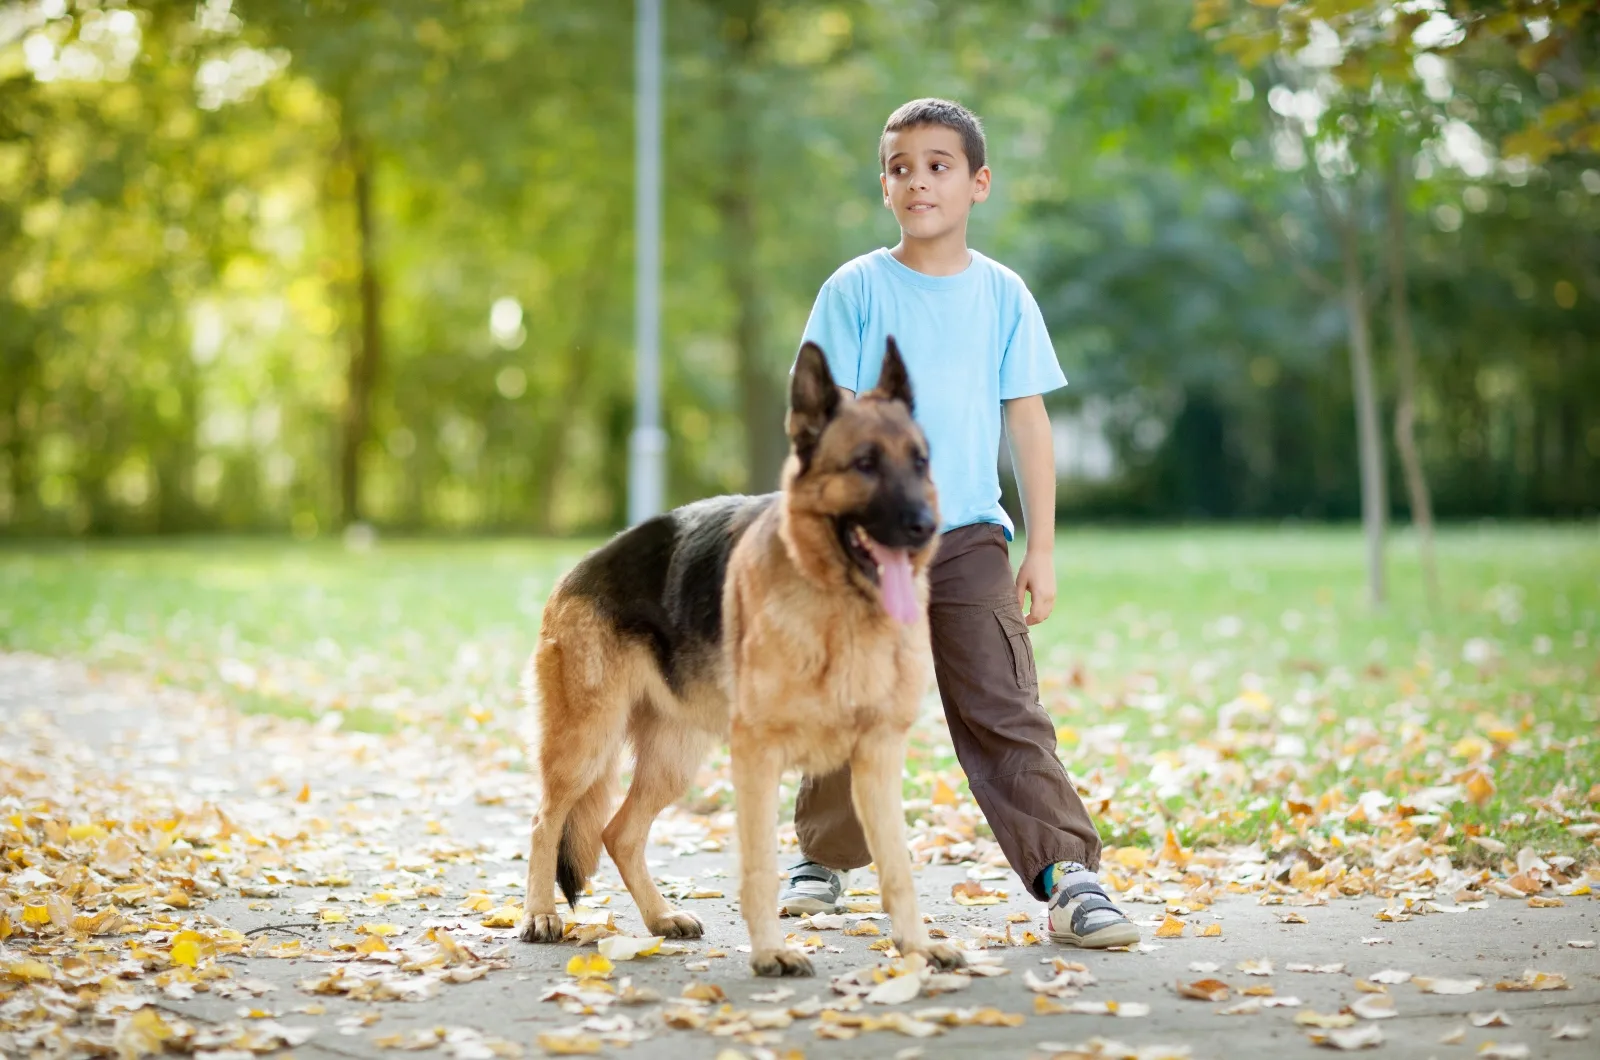 German Shepherd standing by boy in park